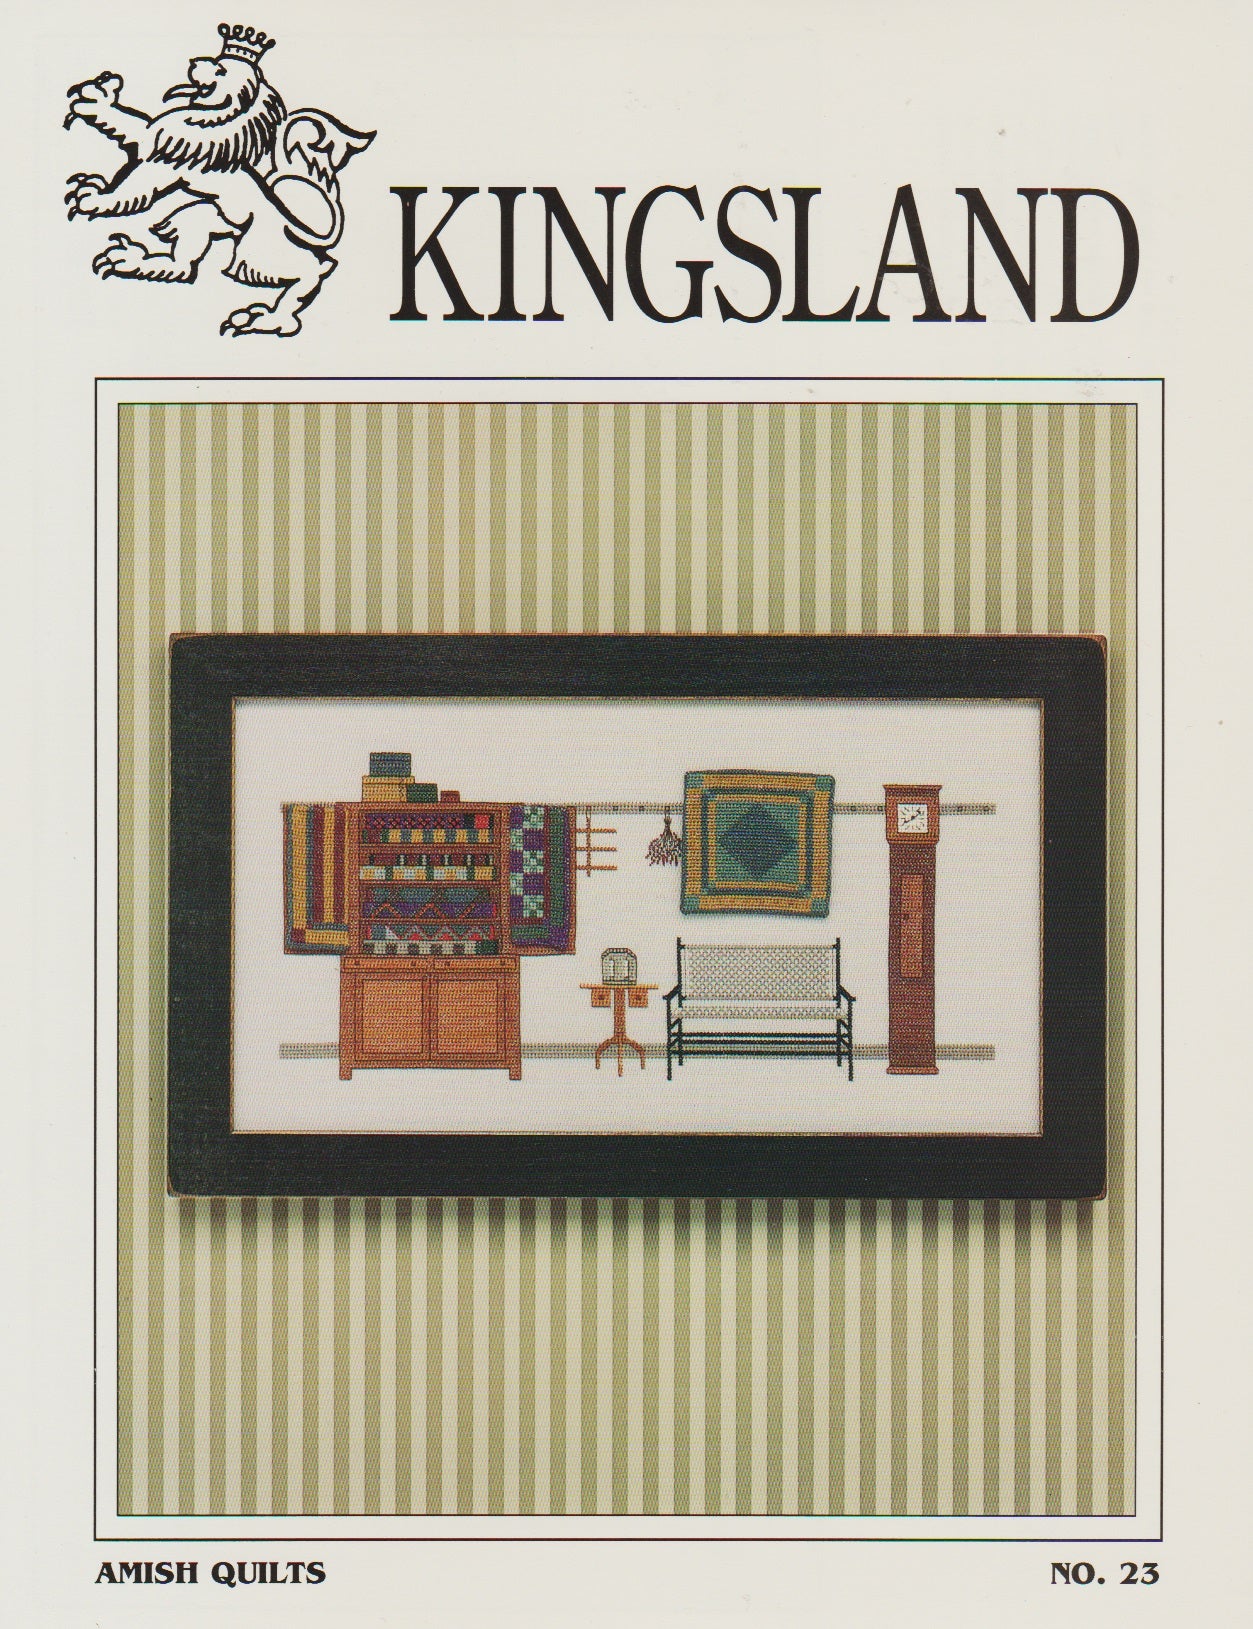 Kingsland Amish Quilts 23 cross stitch pattern